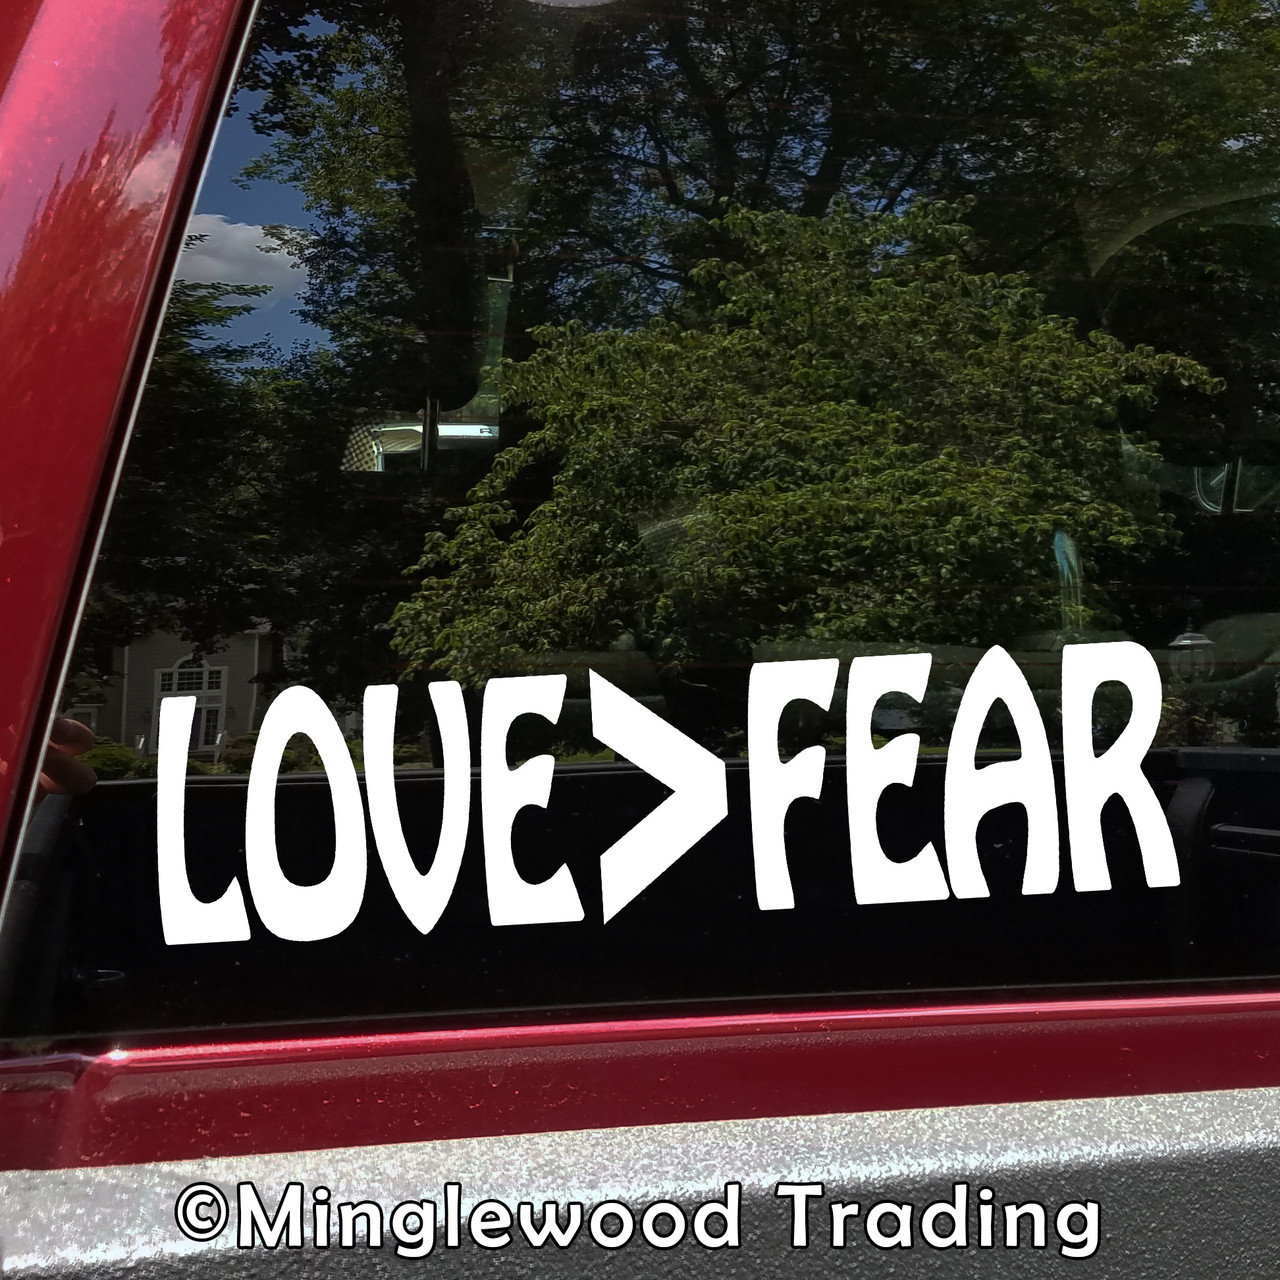 LOVE>FEAR Vinyl Decal - Peace Love is Greater than Fear - Be Kind - Die Cut Sticker